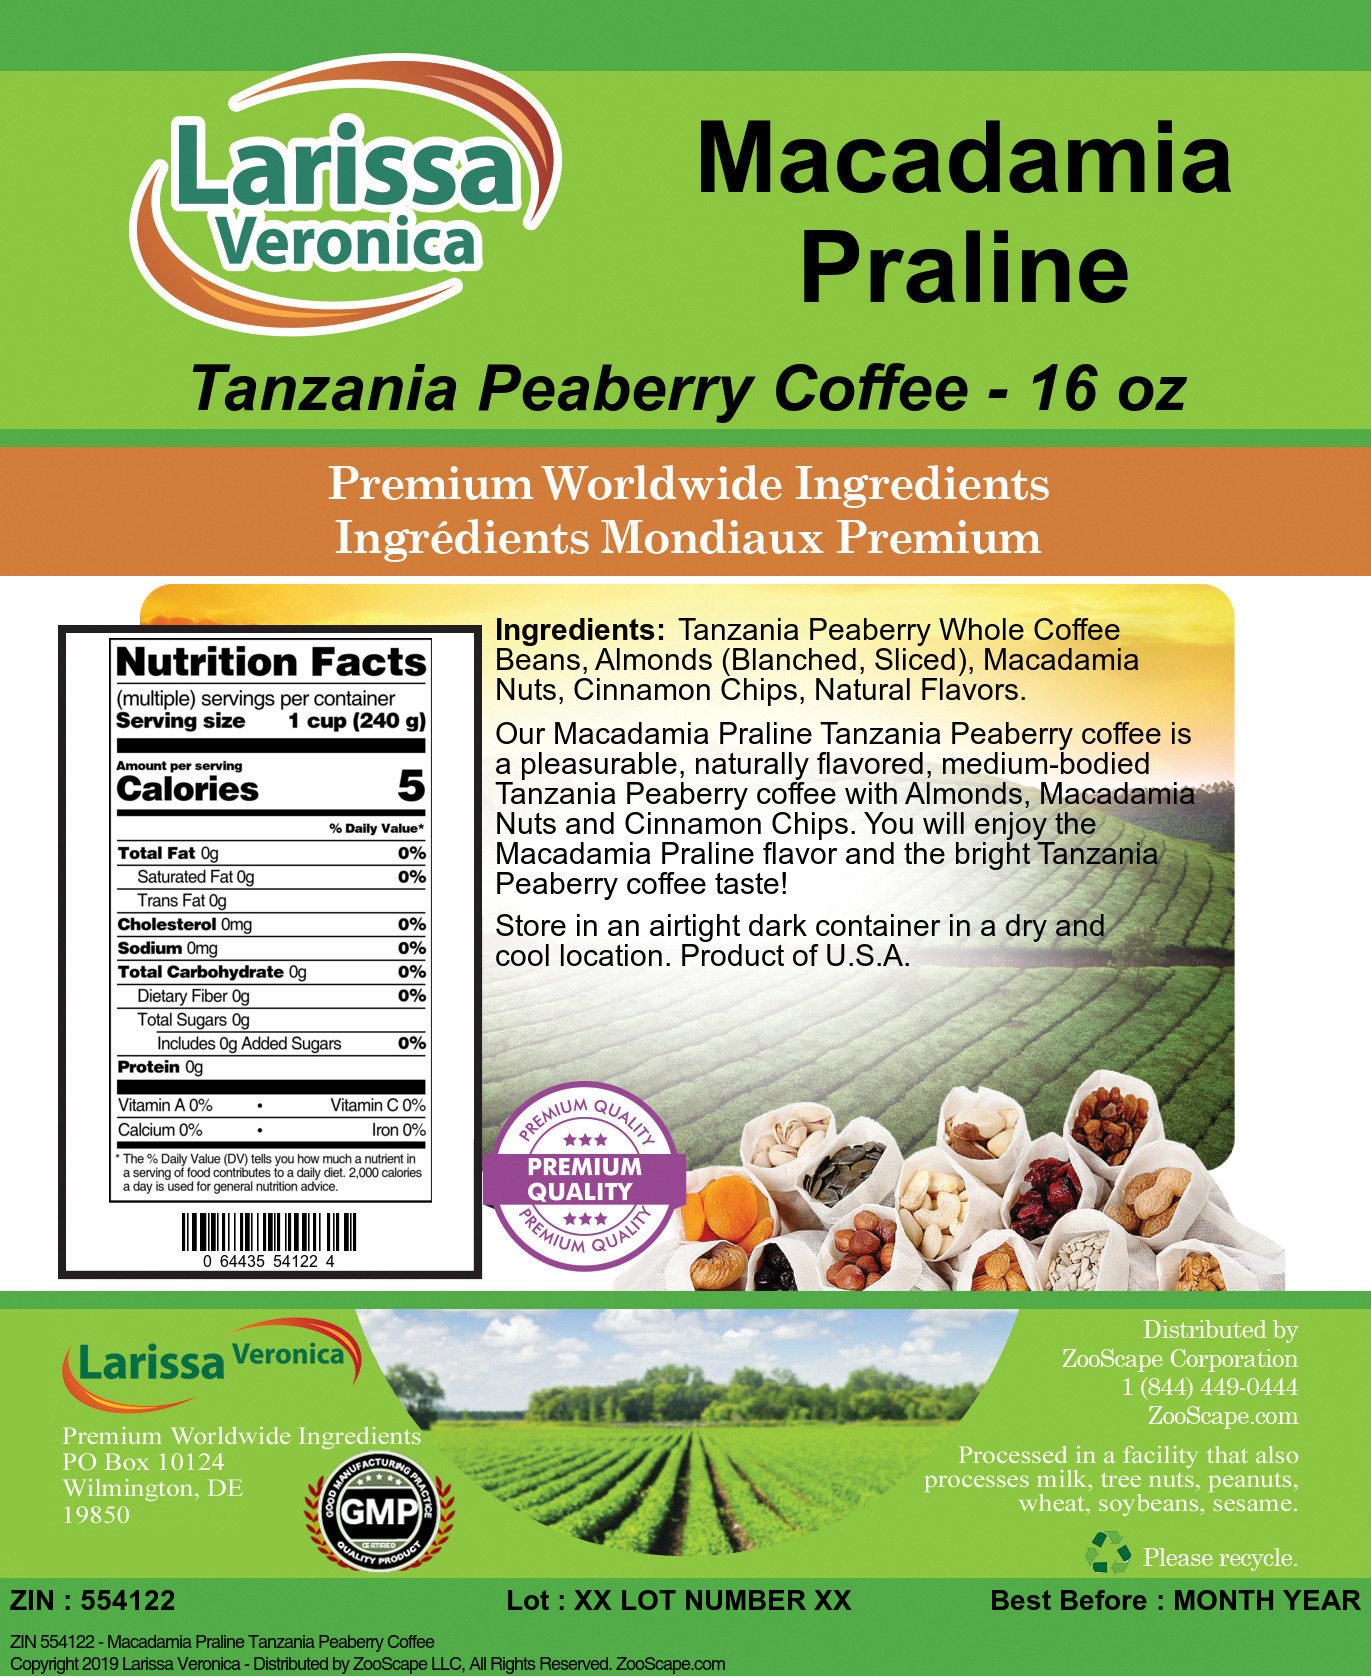 Macadamia Praline Tanzania Peaberry Coffee - Label